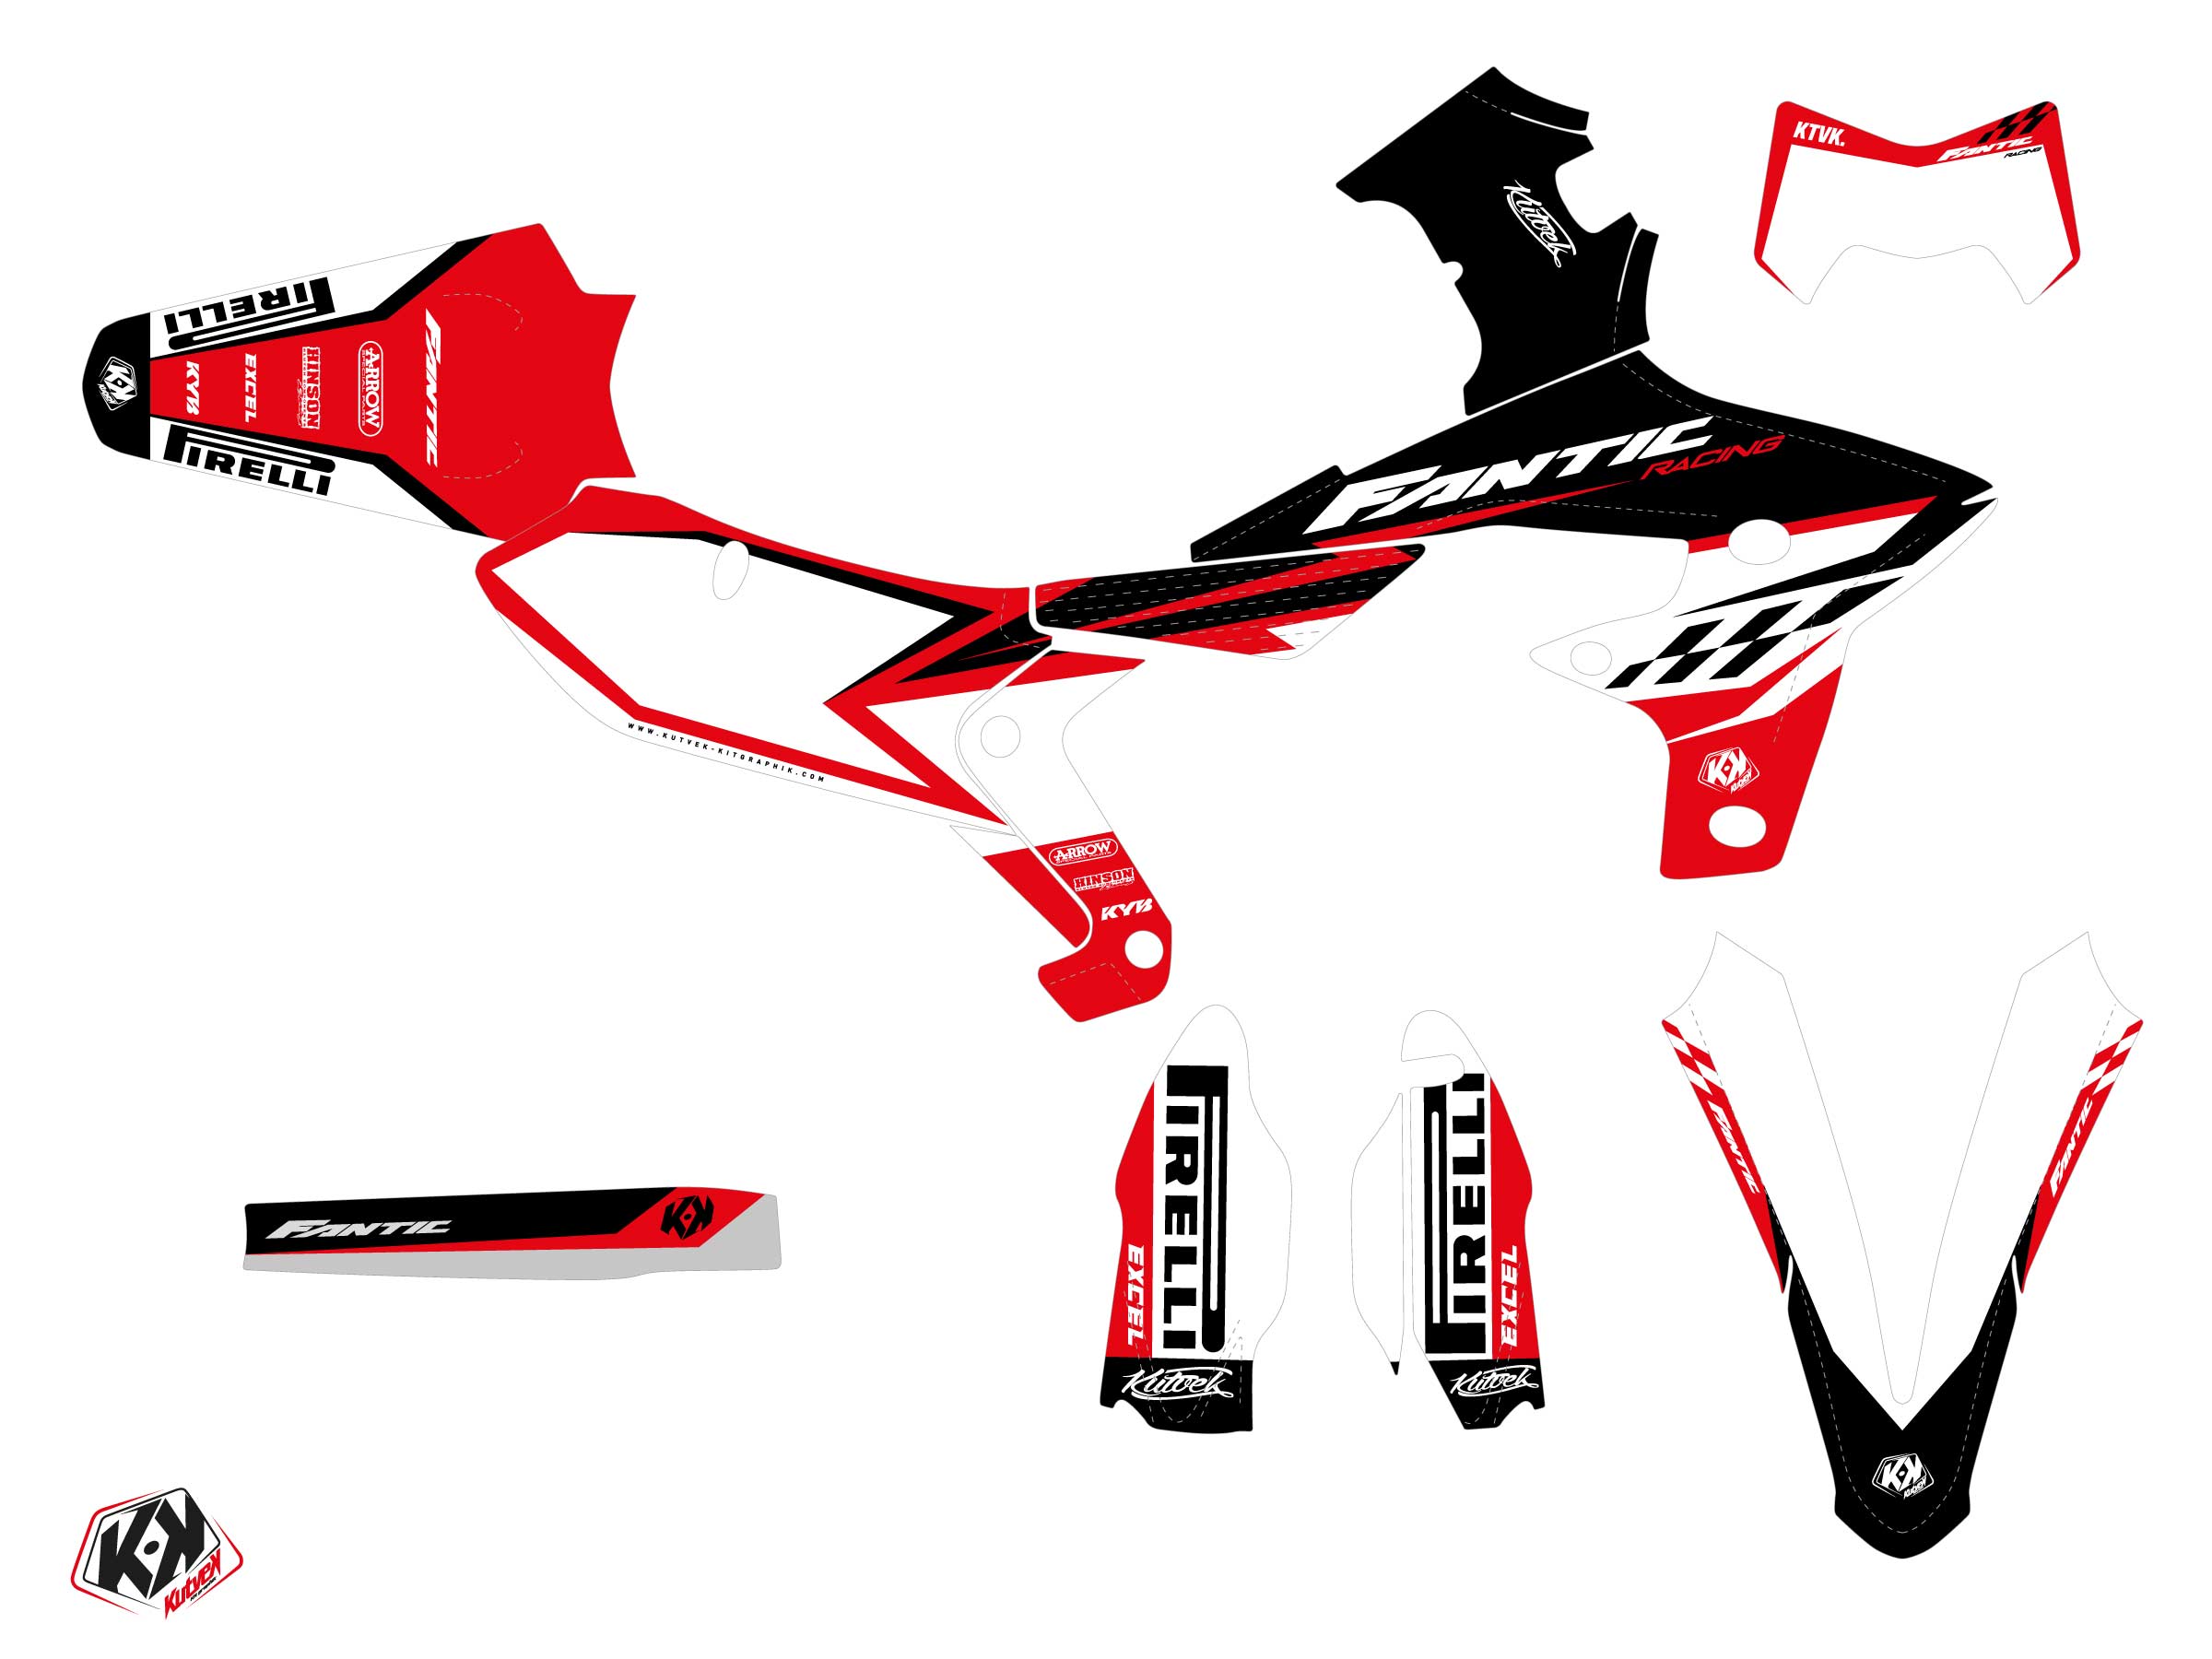 Fantic Xef 450 Dirt Bike Inkline Graphic Kit Red